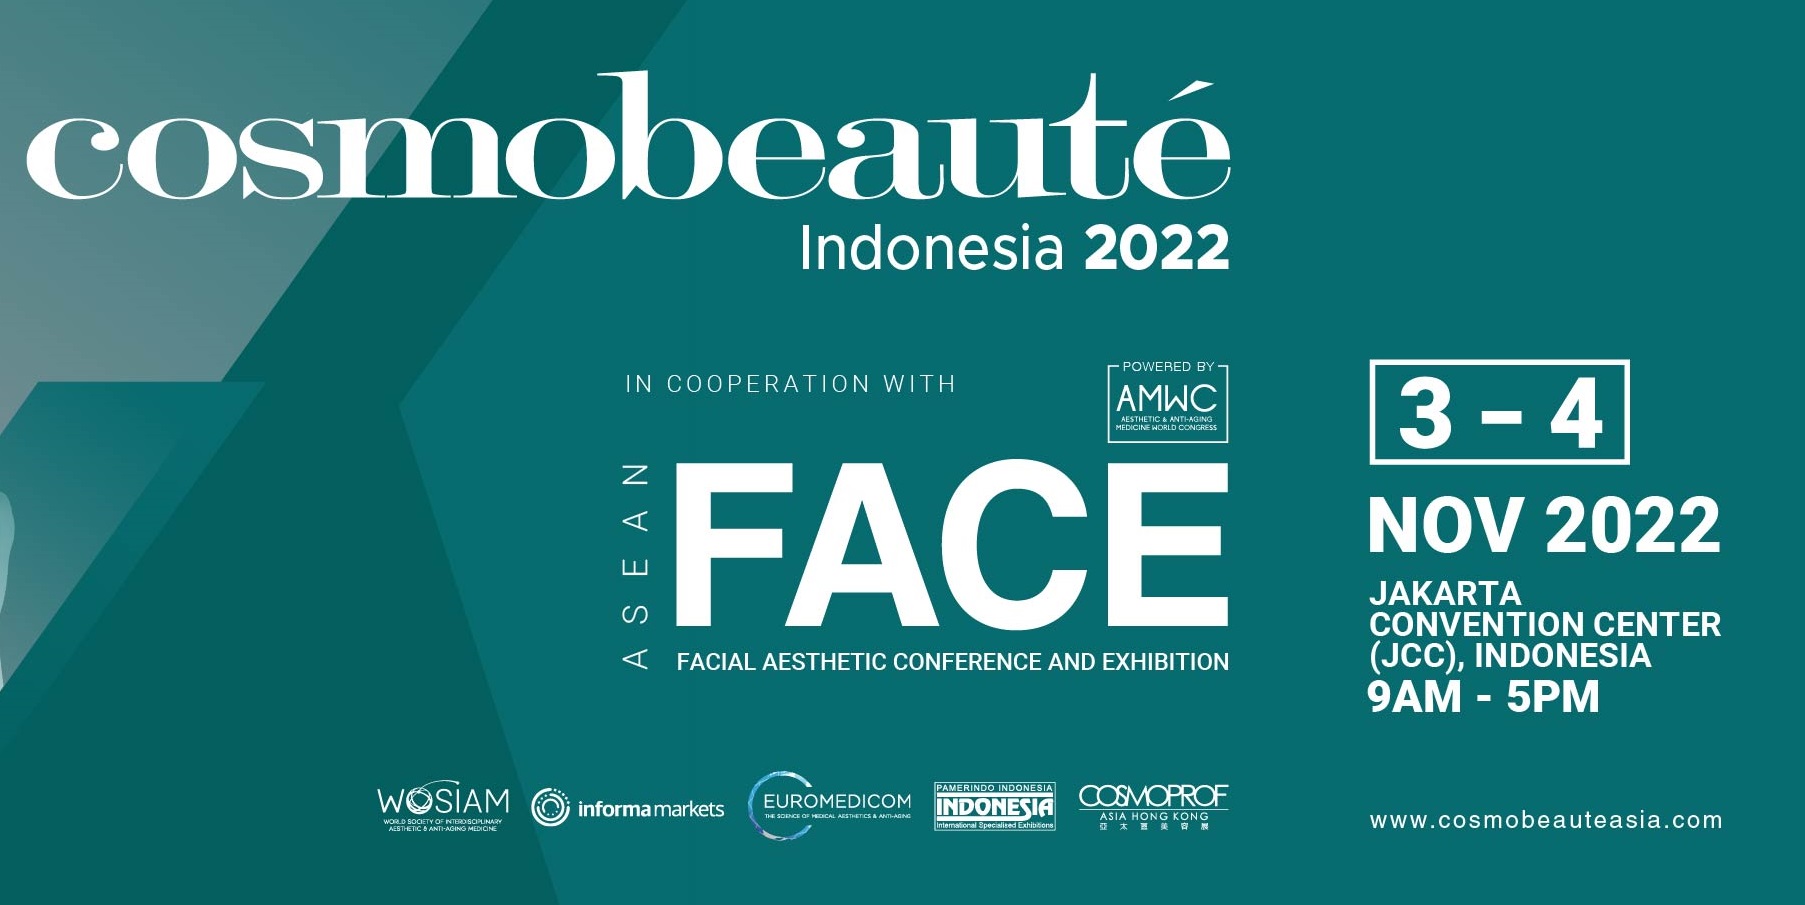 Cosmobeaute Indonesia 2022